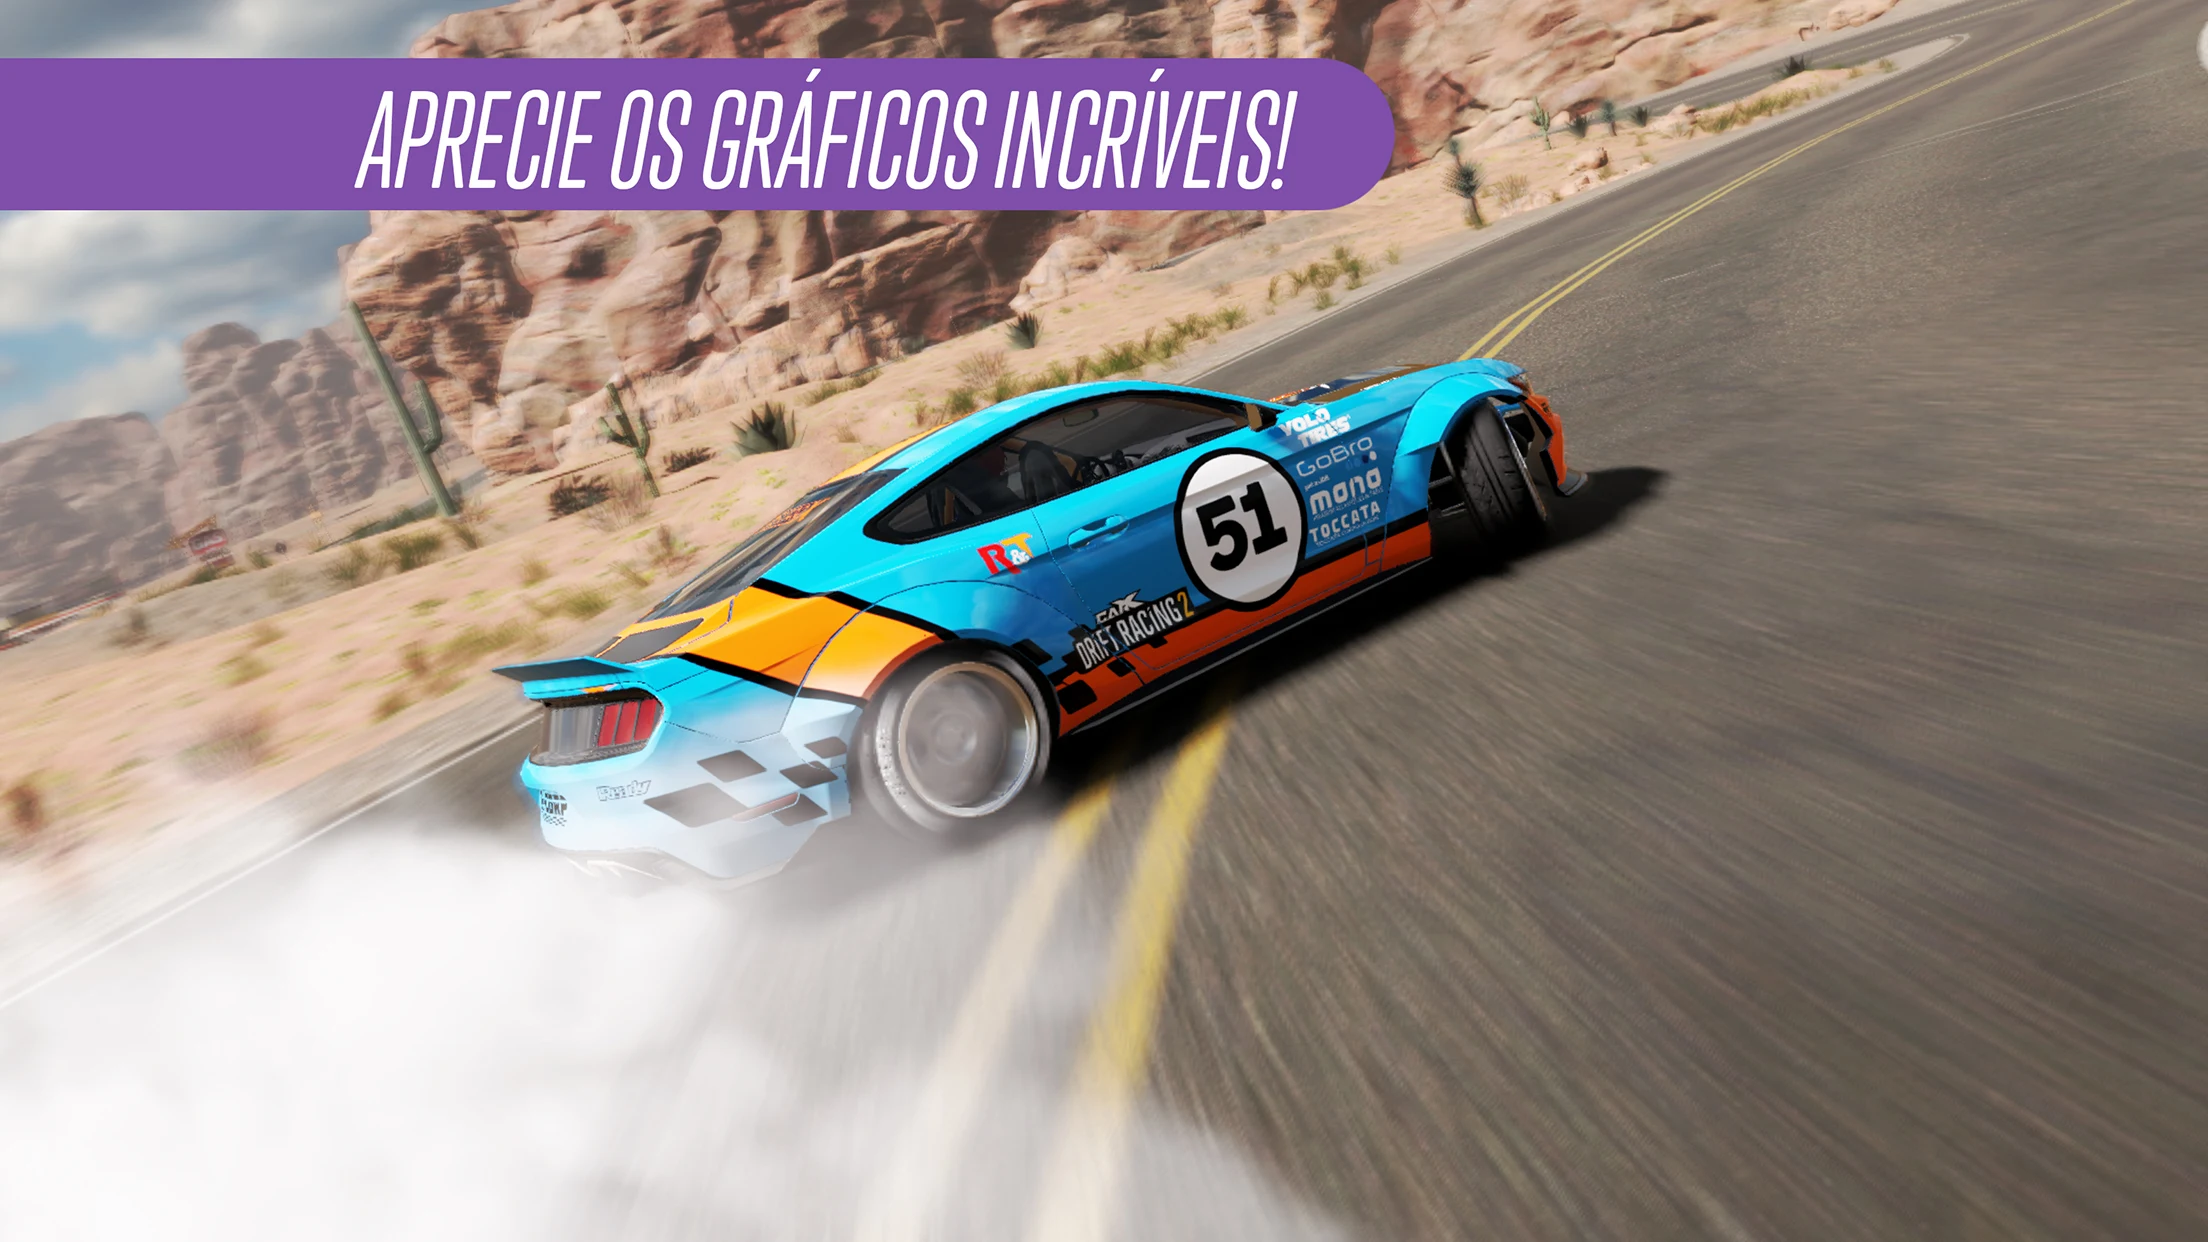 CarX Drift Racing 2 APK Mod 1.29.1 (Dinheiro infinito) Download